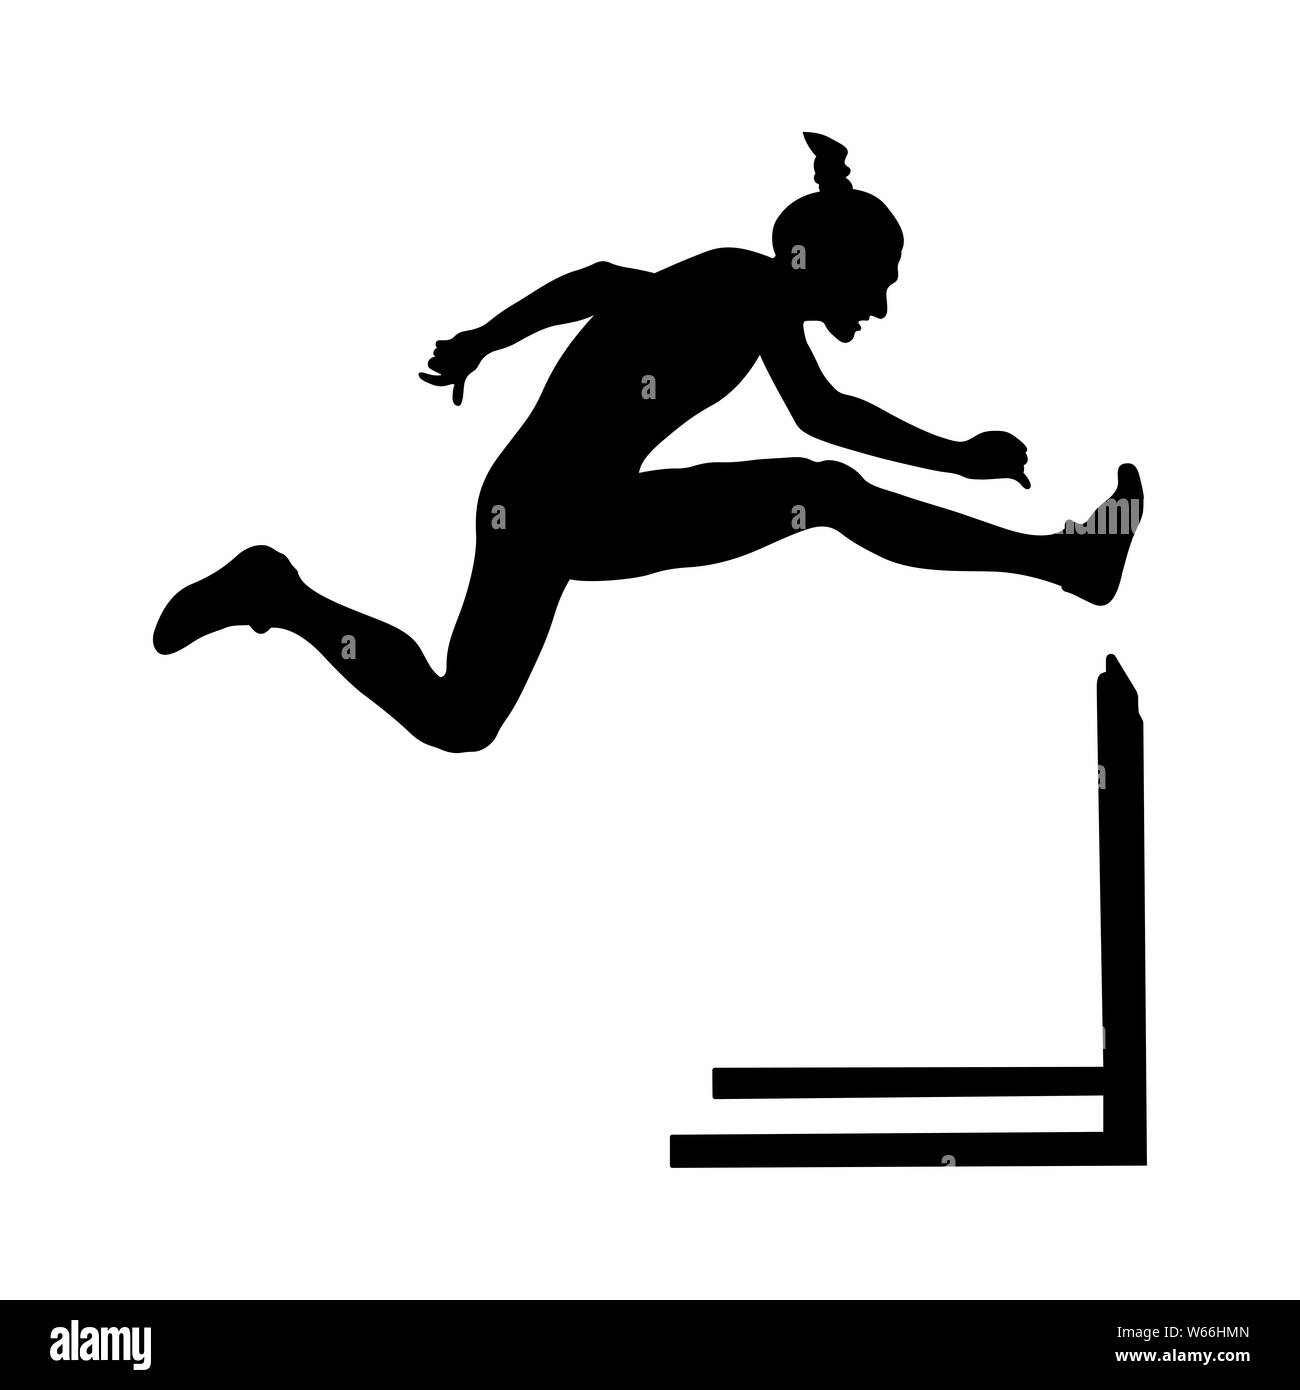 women athlete runner running hurdles attack black silhouette Stock Photo